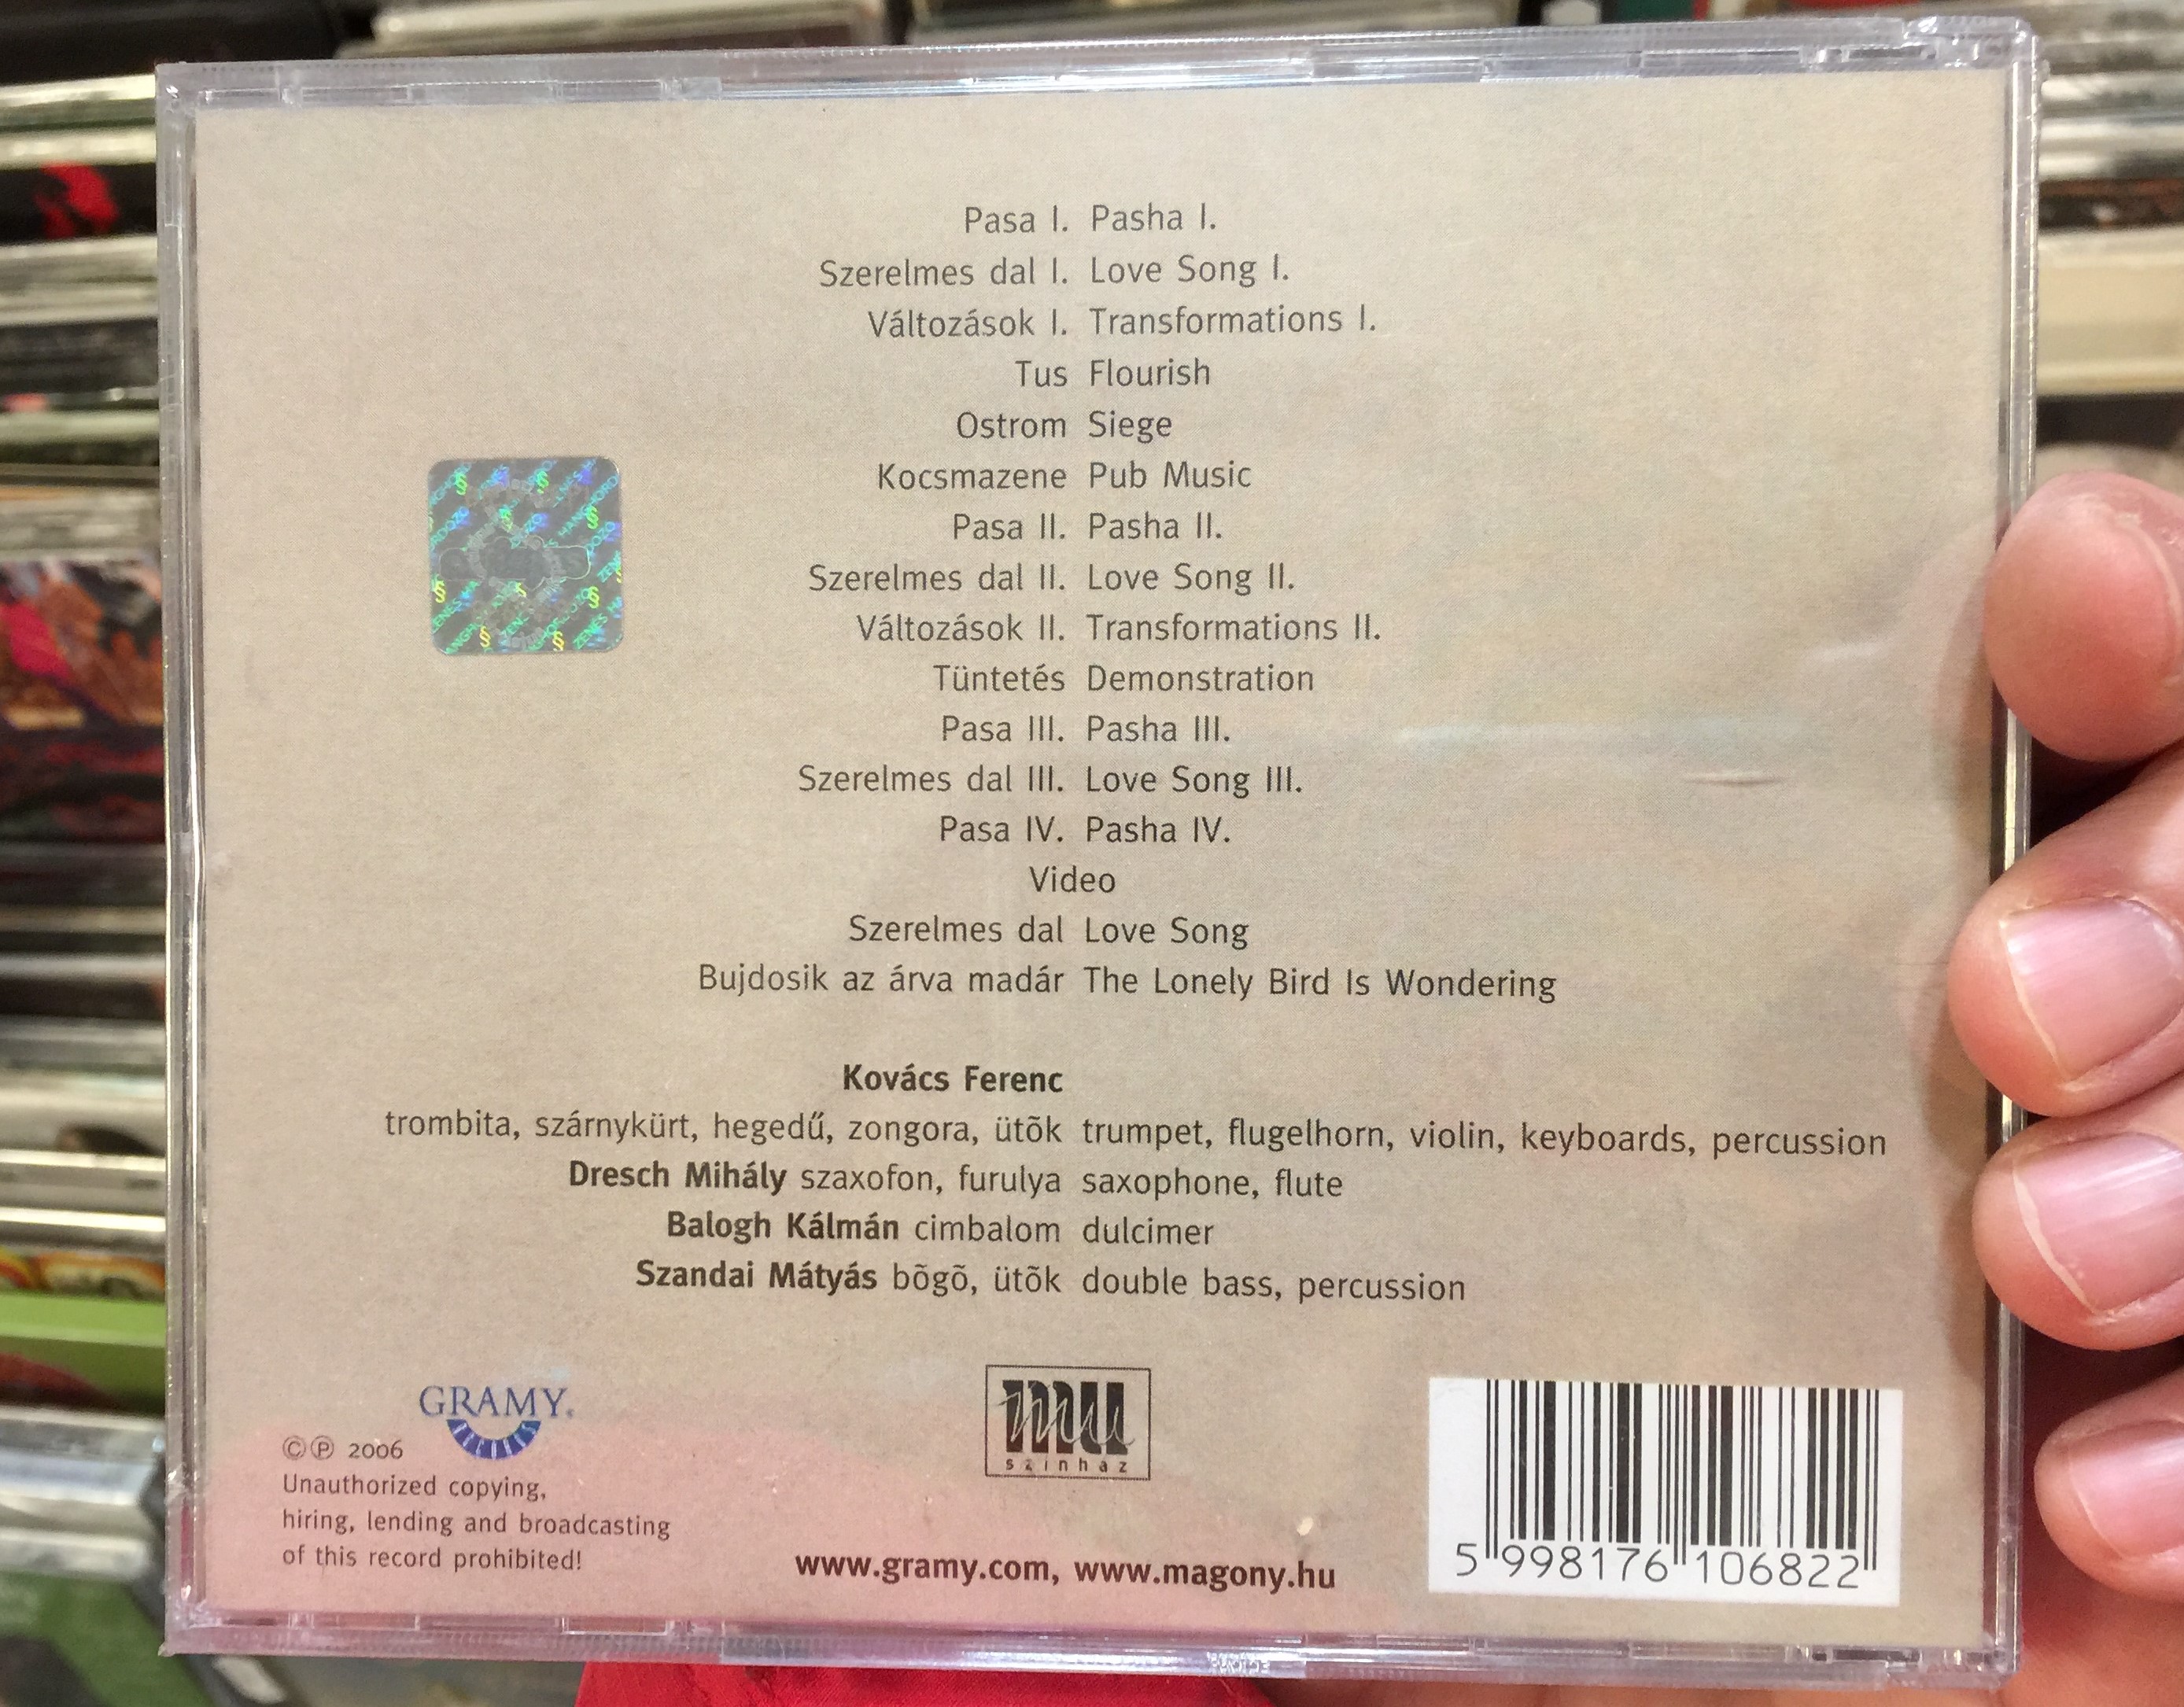 kov-cs-ferenc-beli-buba-with-dresch-mihaly-balogh-kalman-szandai-matyas-gramy-records-audio-cd-2006-gr-068-2-.jpg